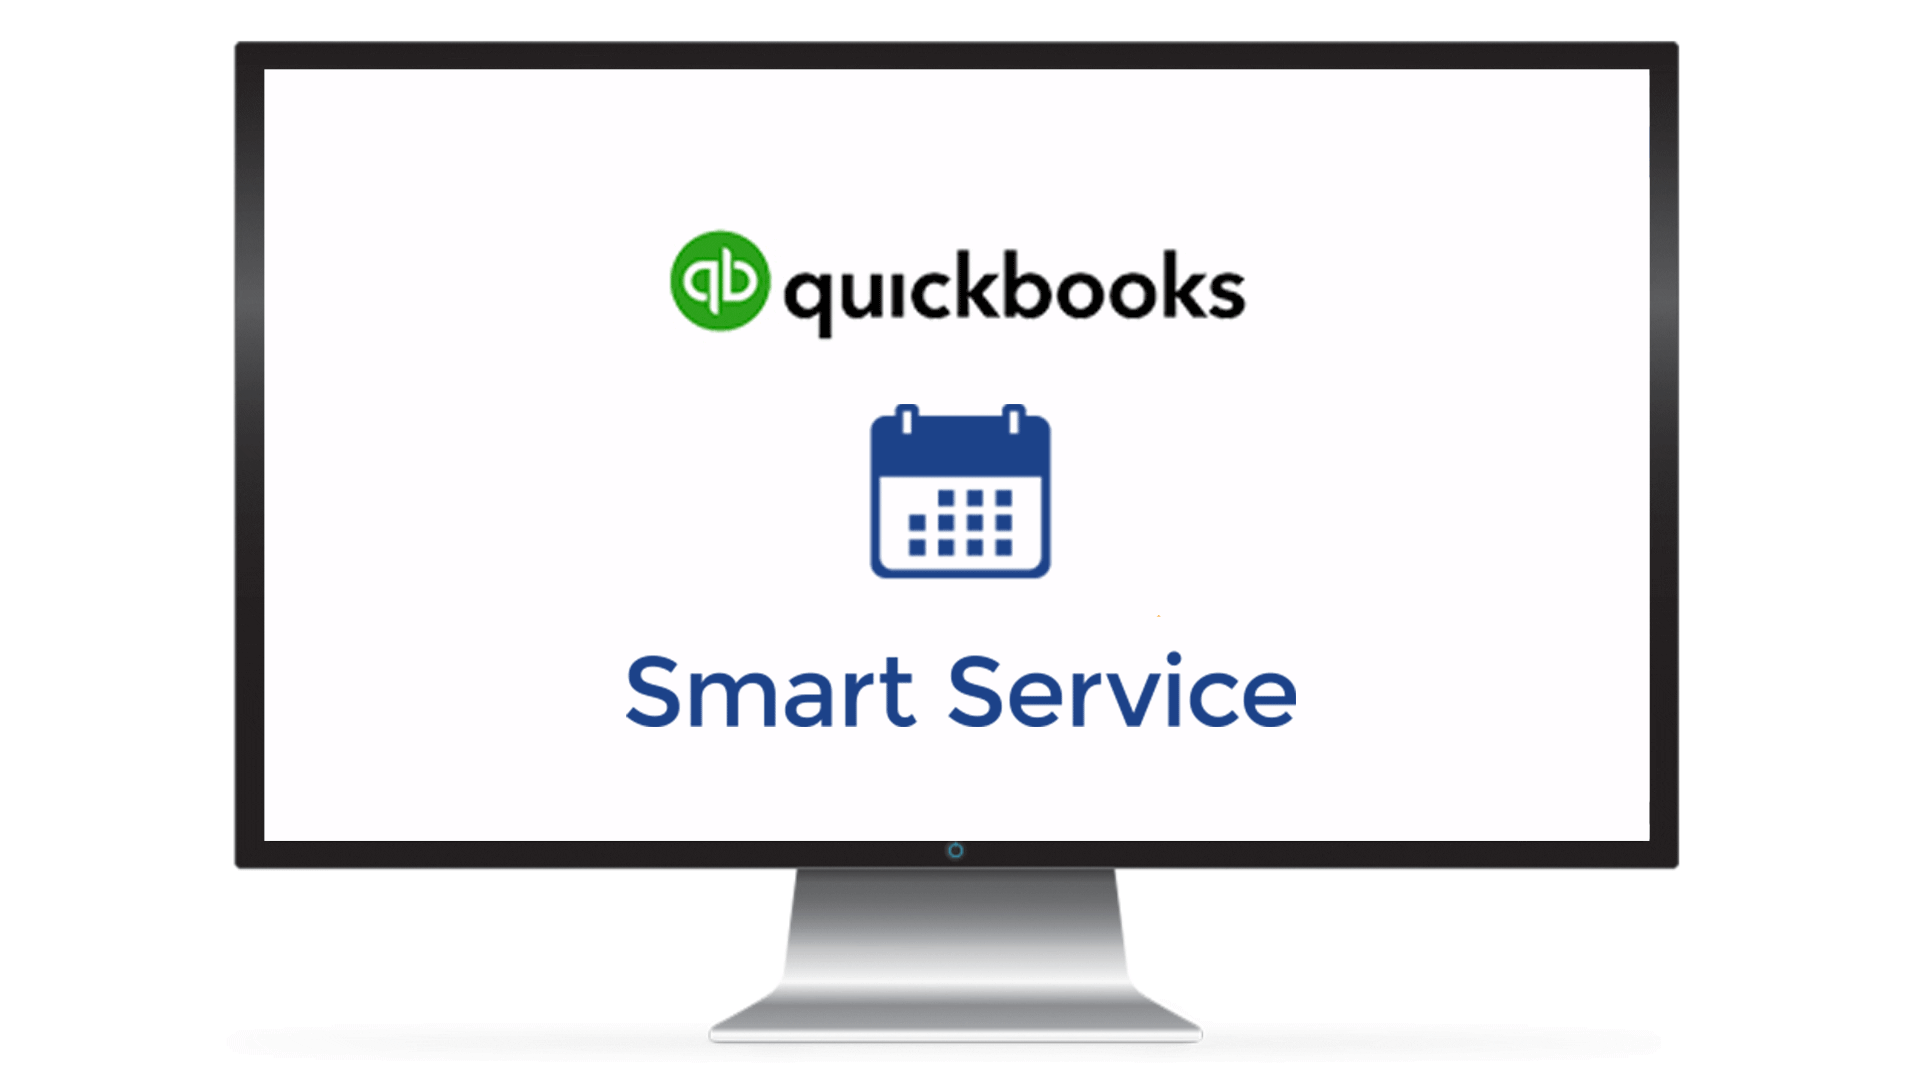 field service HVAC software for quickbooks